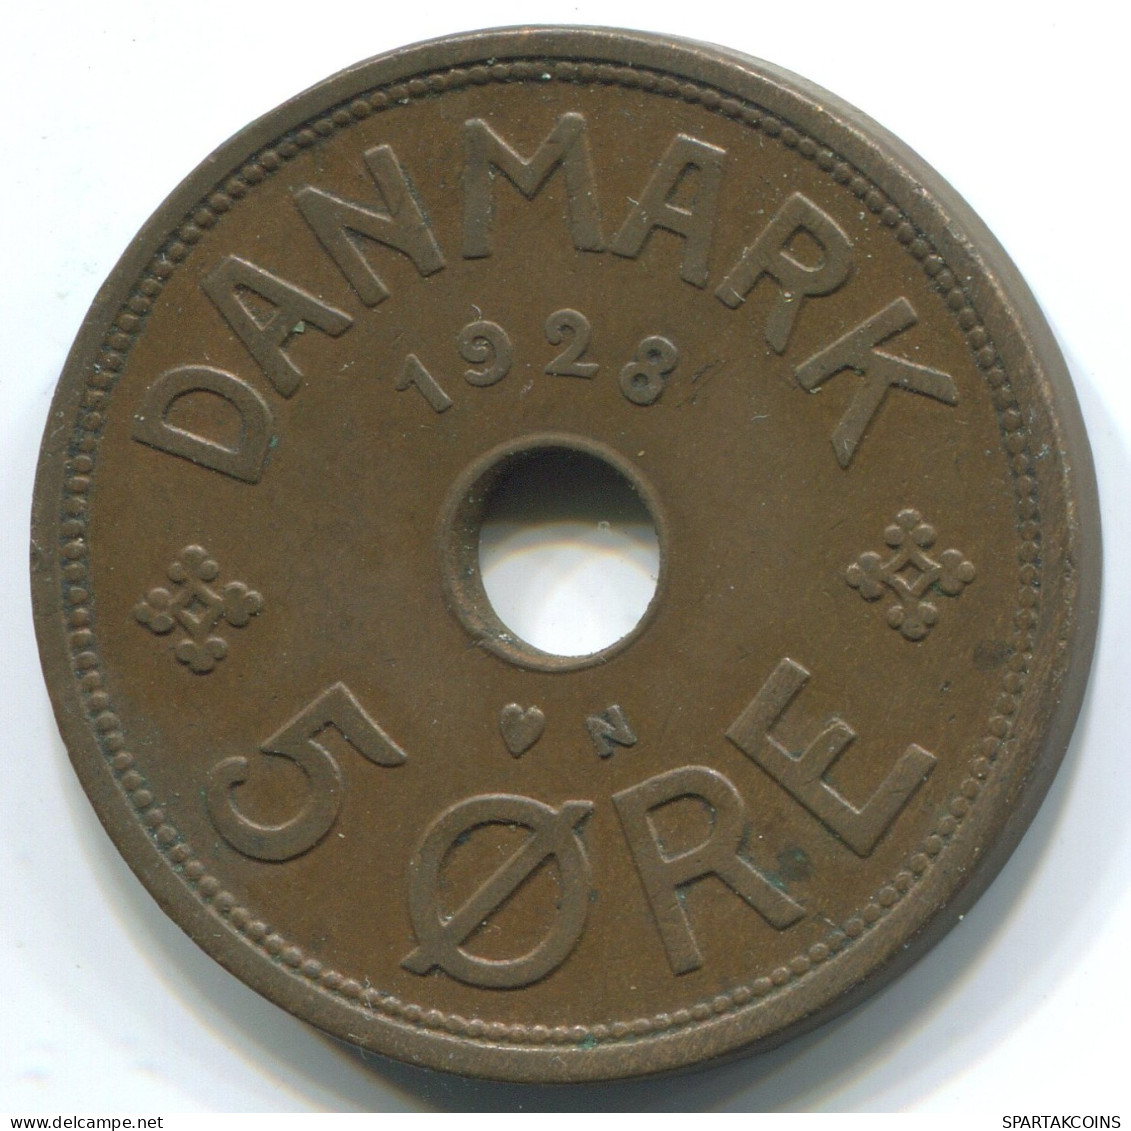 5 ORE 1928 DENMARK Coin #WW1006.U.A - Danemark